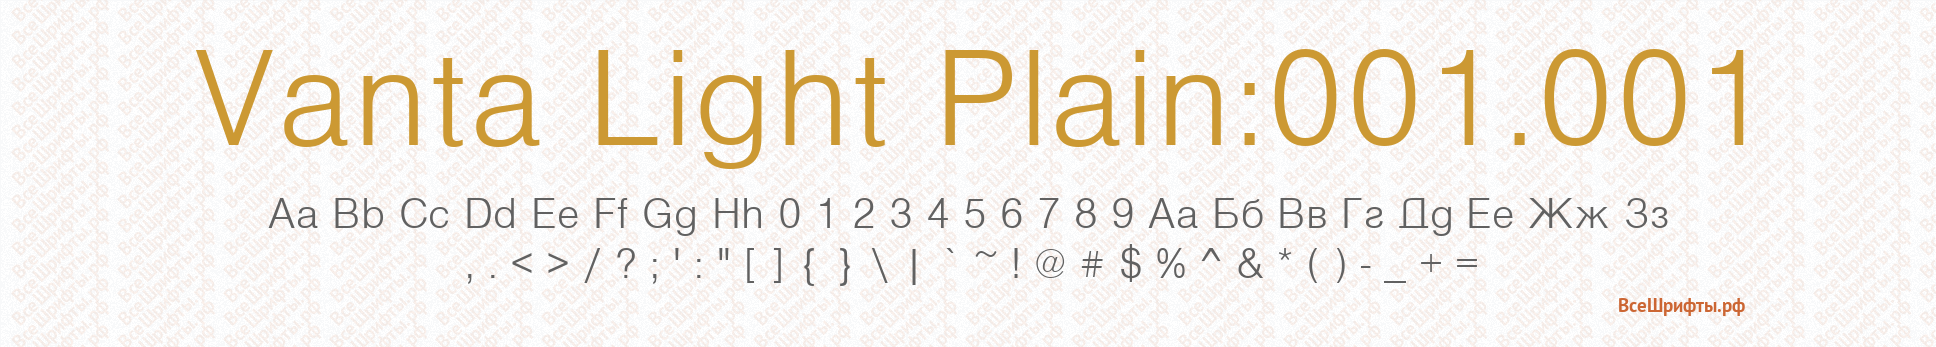 Шрифт Vanta Light Plain:001.001